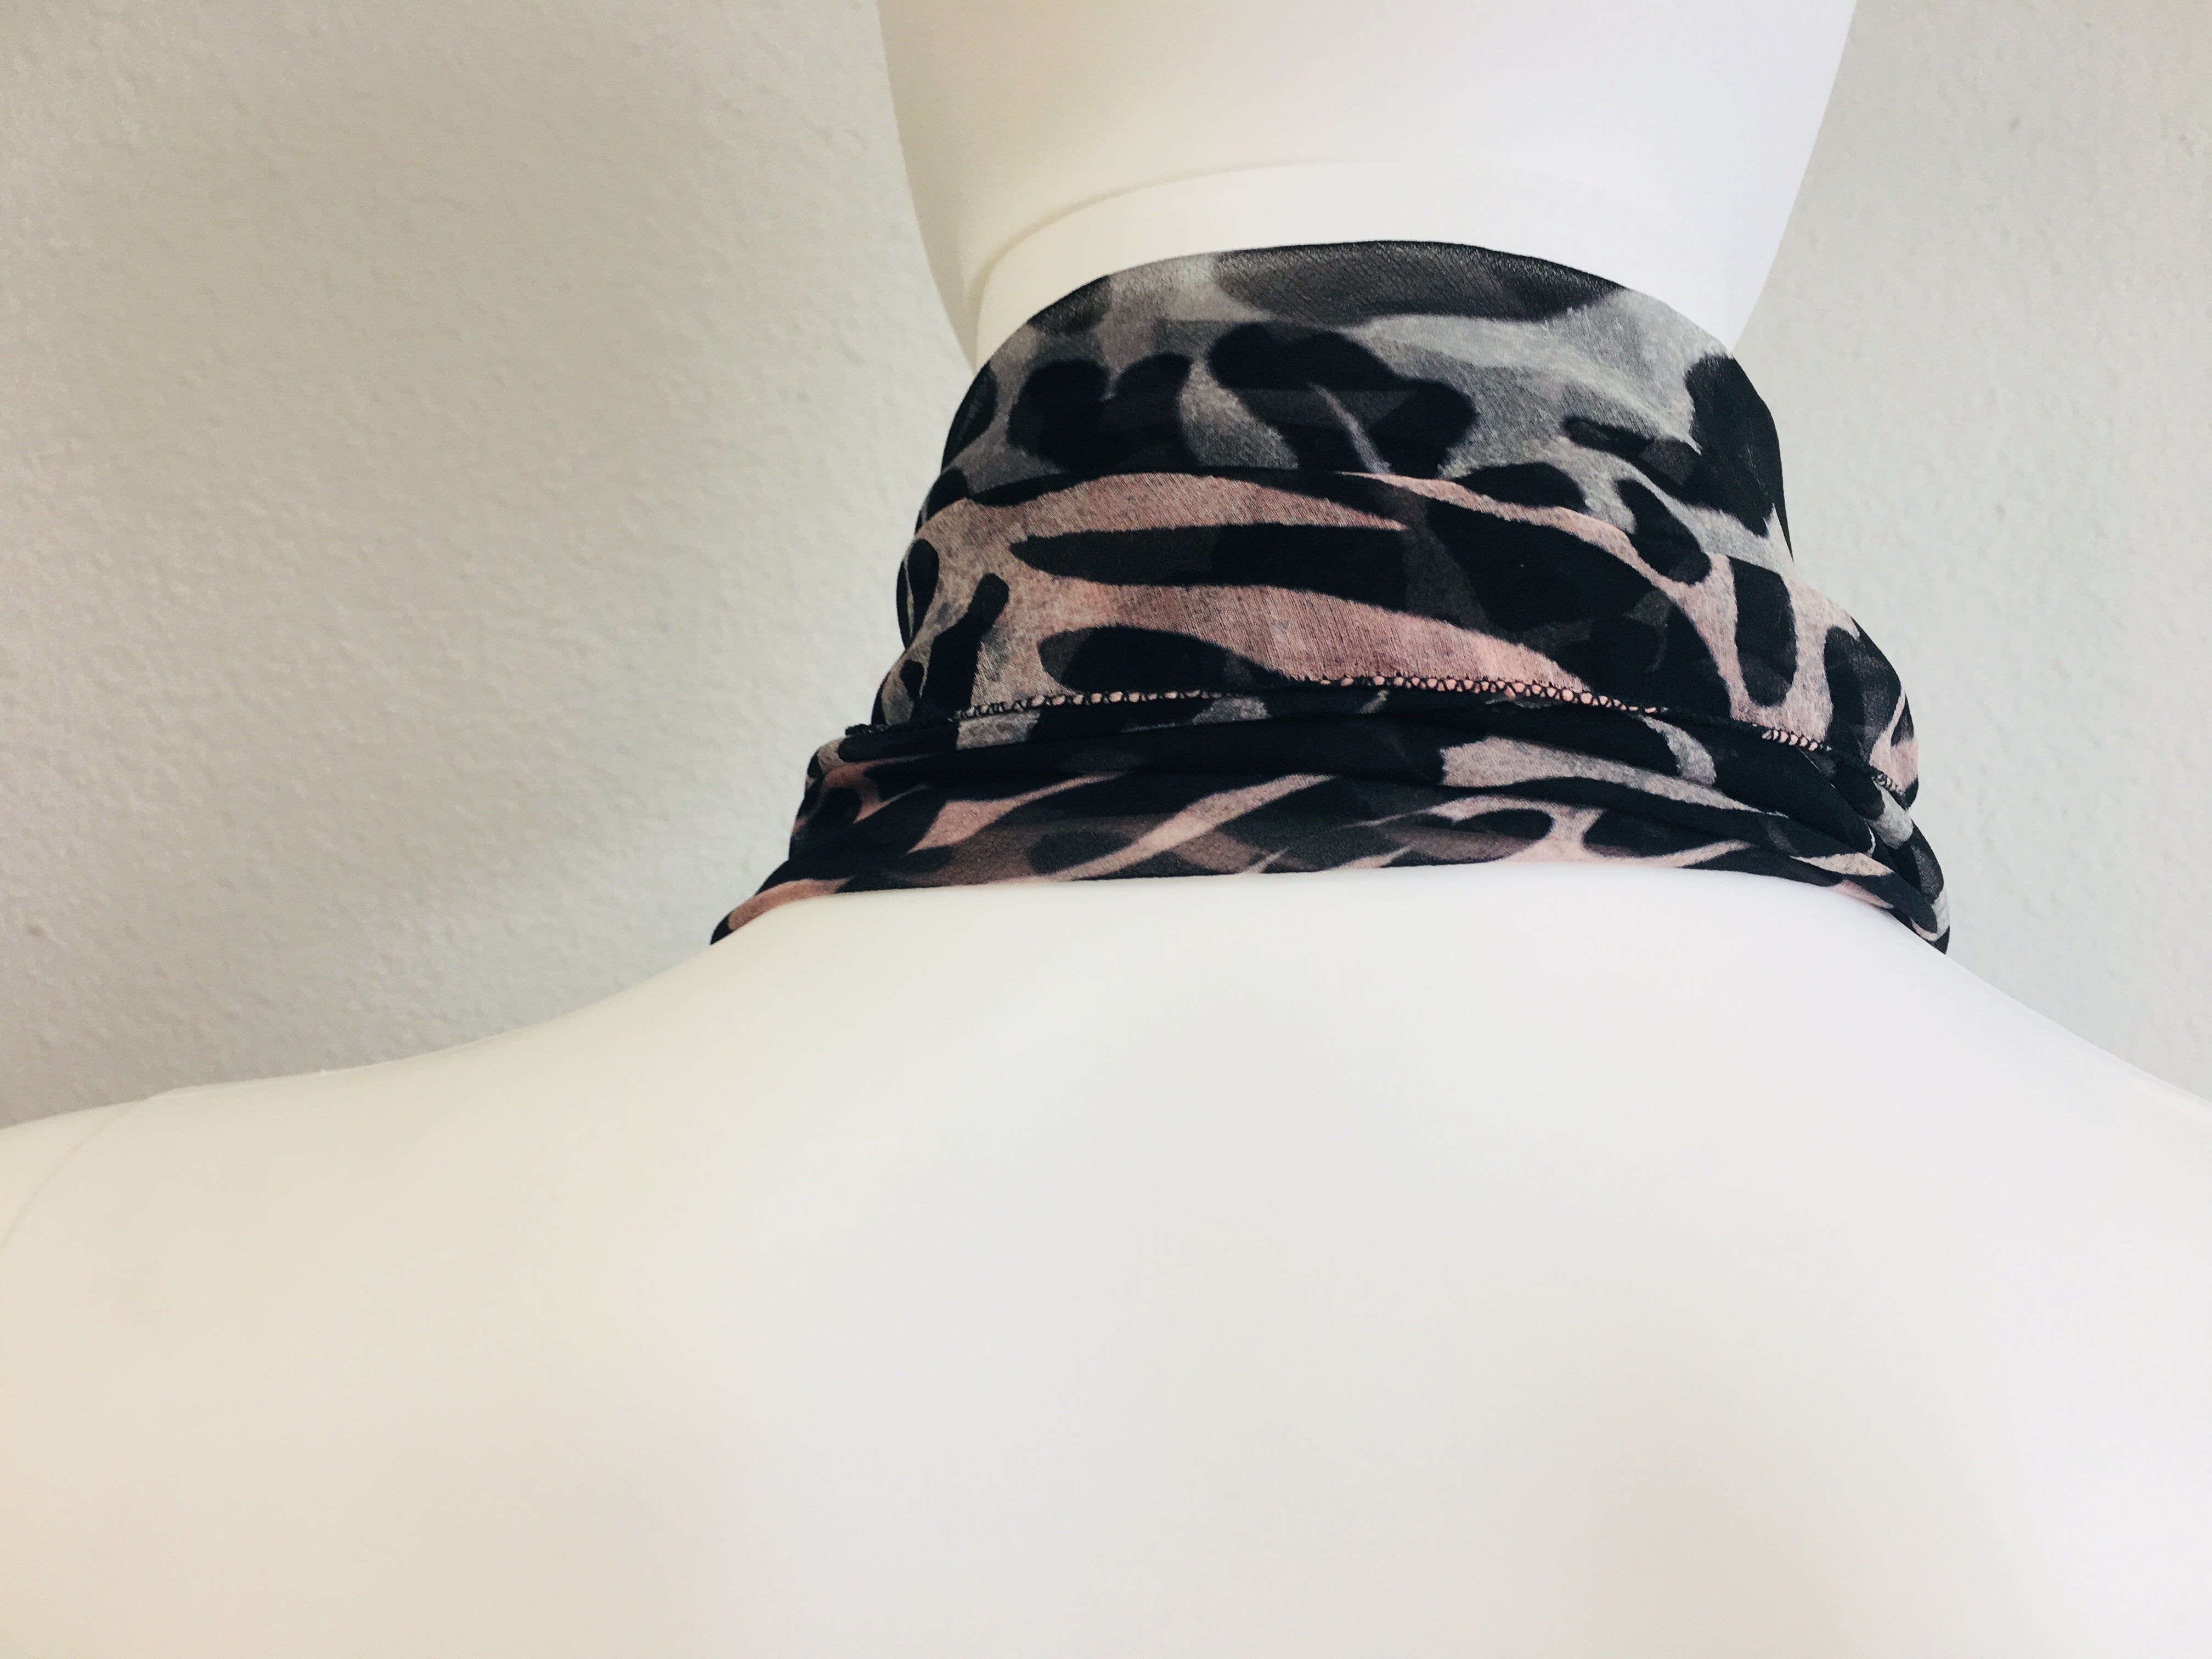 black and white leopard scarf - Vanity's Vault